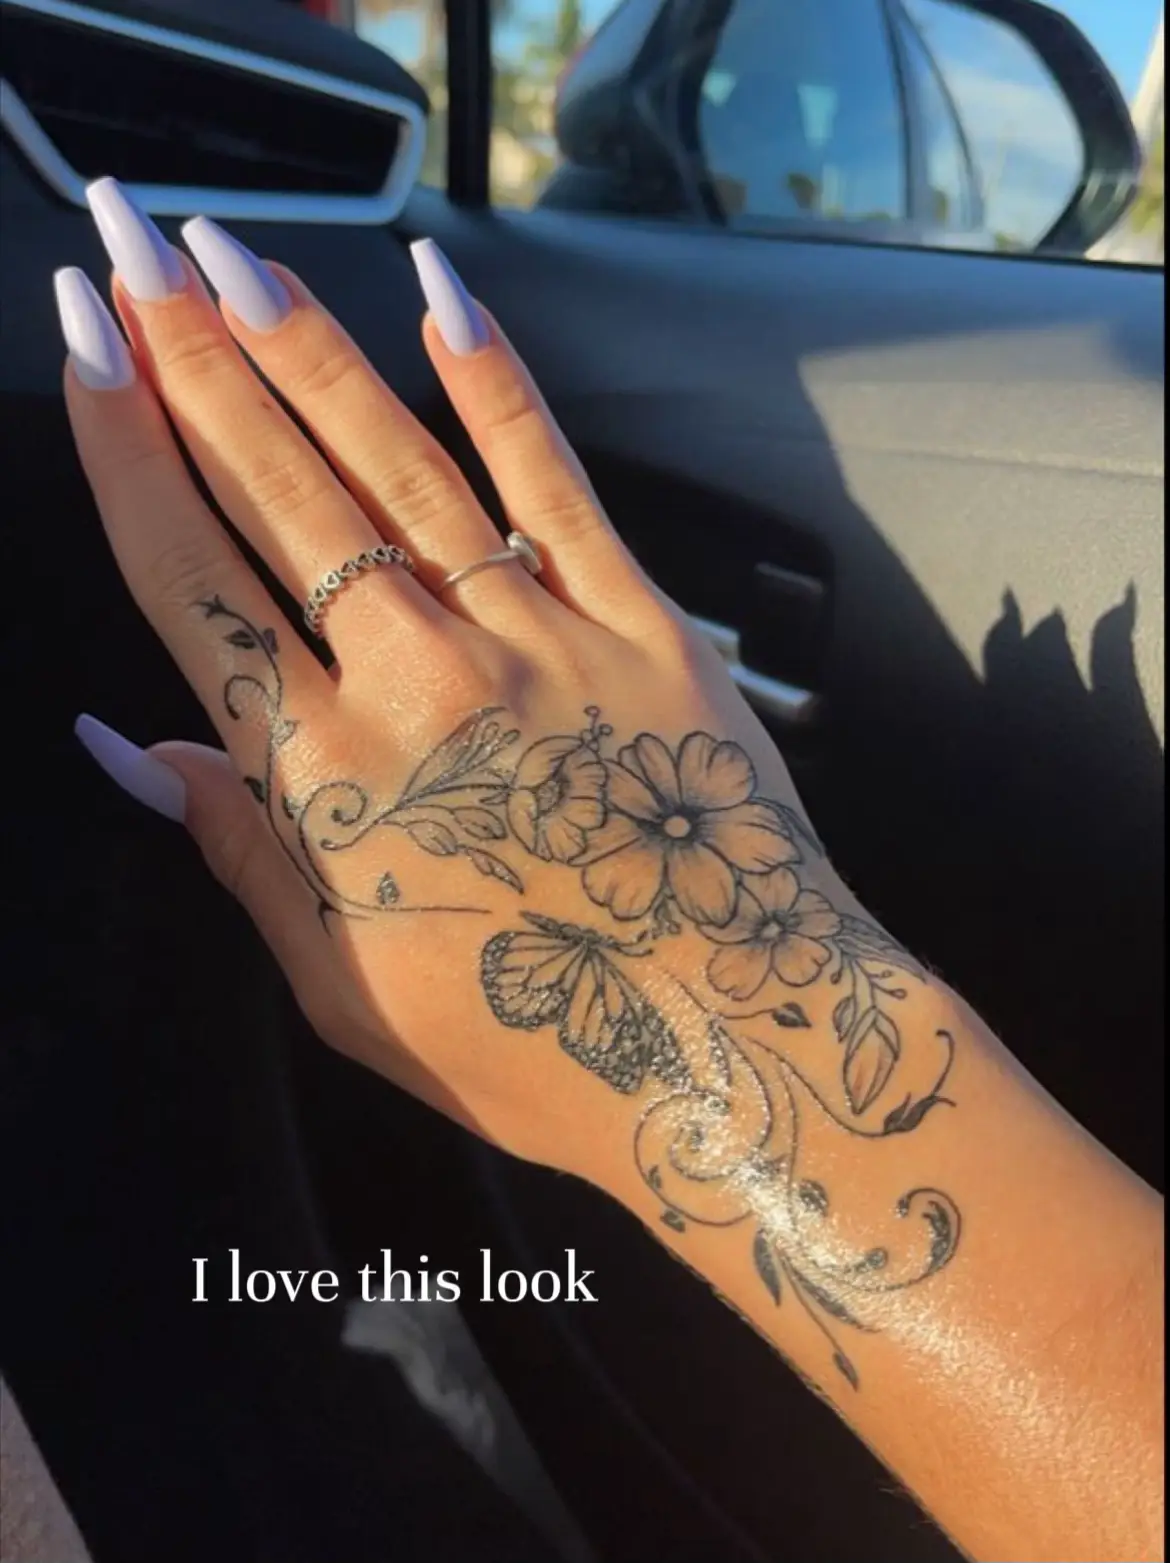 Pitbull Tattoo Thailand on Tumblr: 🔔OPENING SOON🔔 Full leg